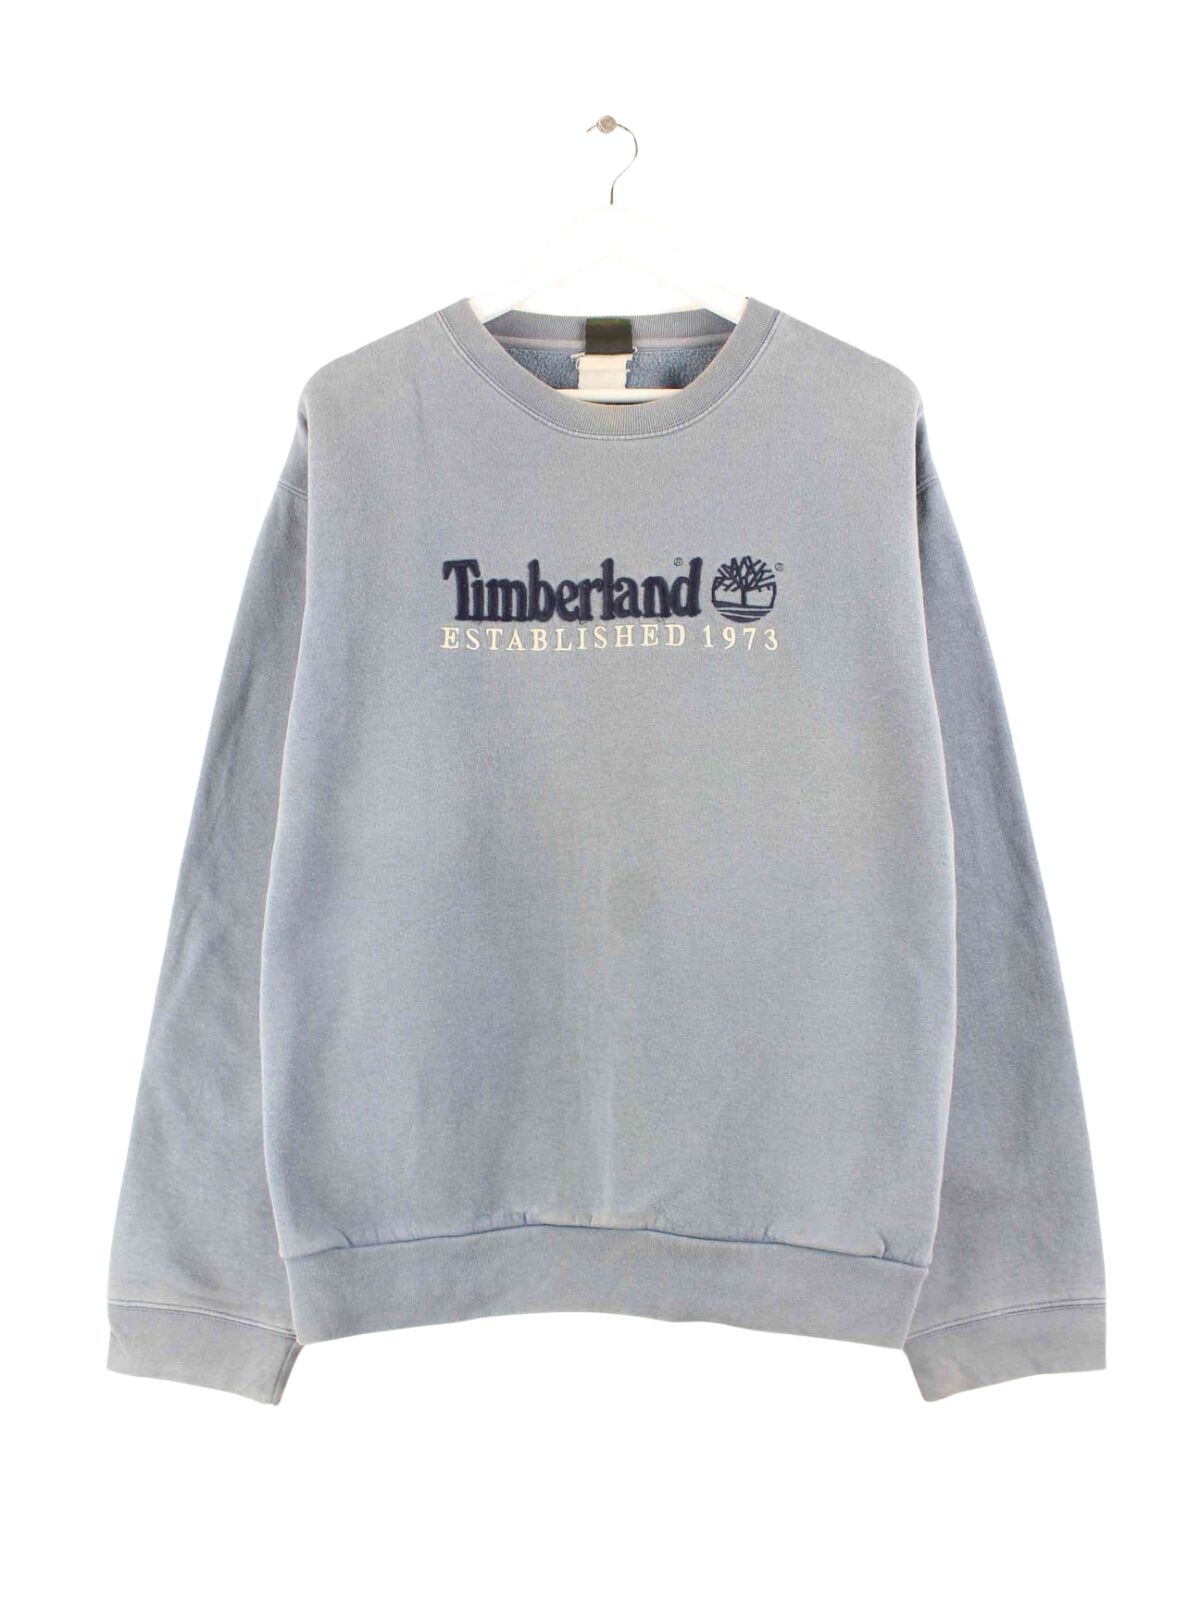 Timberland 90s Vintage Embroidered Sweater Blau L